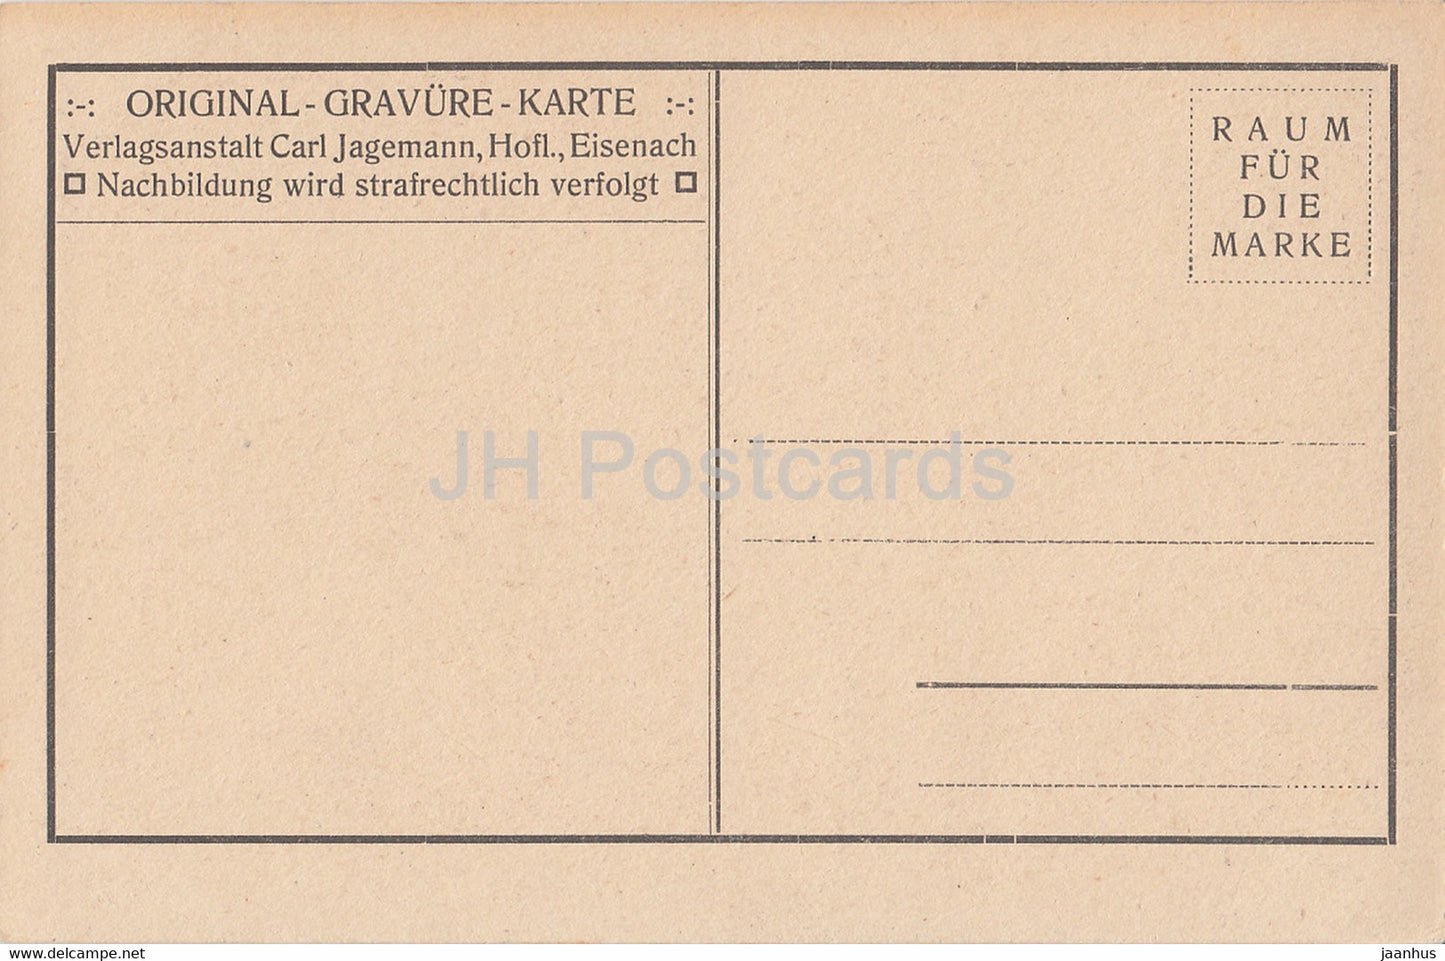 Die Altensteiner Hohle - grotte - carte postale ancienne - Allemagne - inutilisée